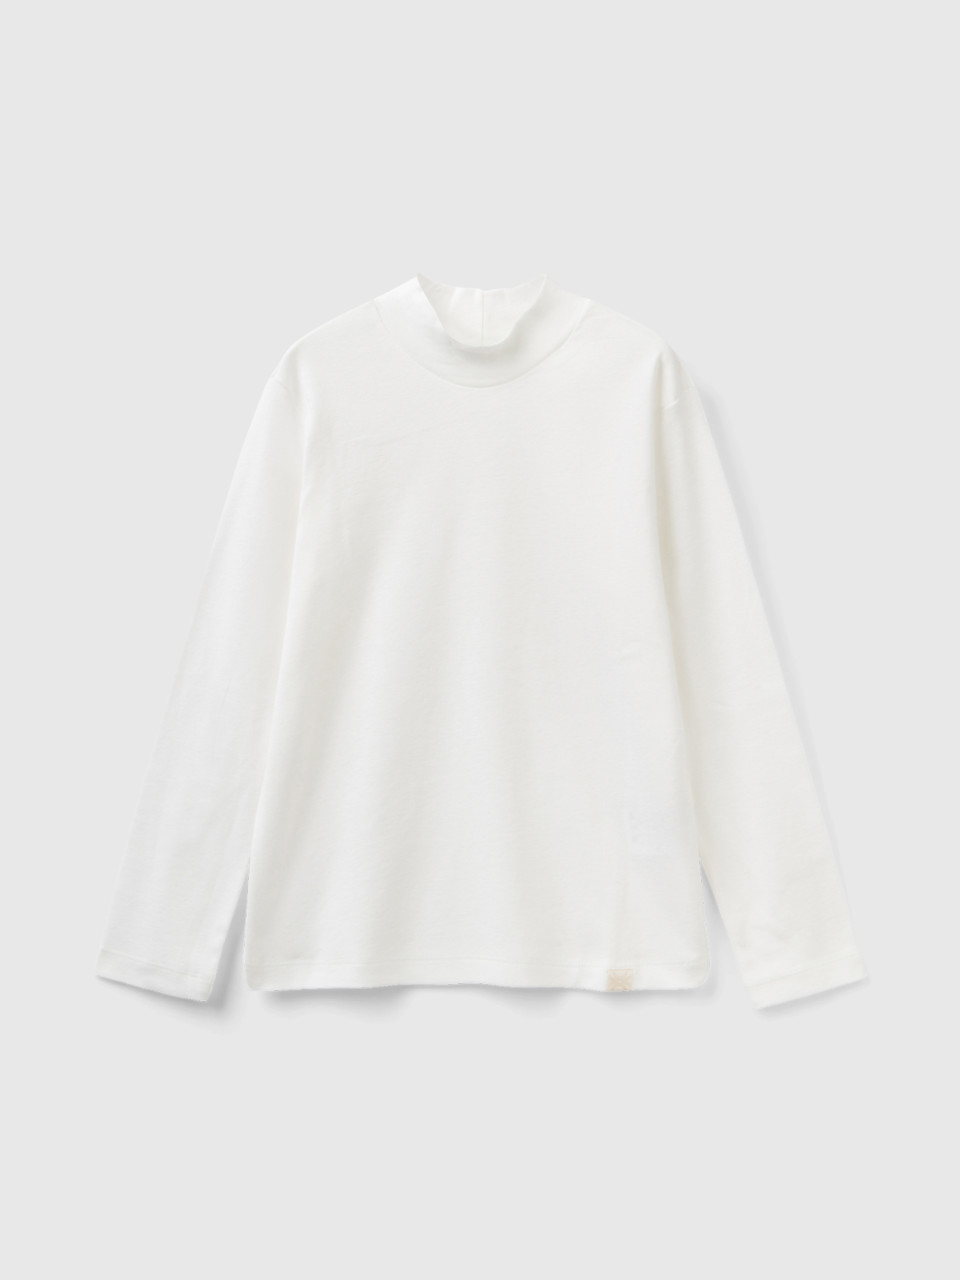 Benetton, Rubbed Knit Turtleneck T-shirt, White, Kids